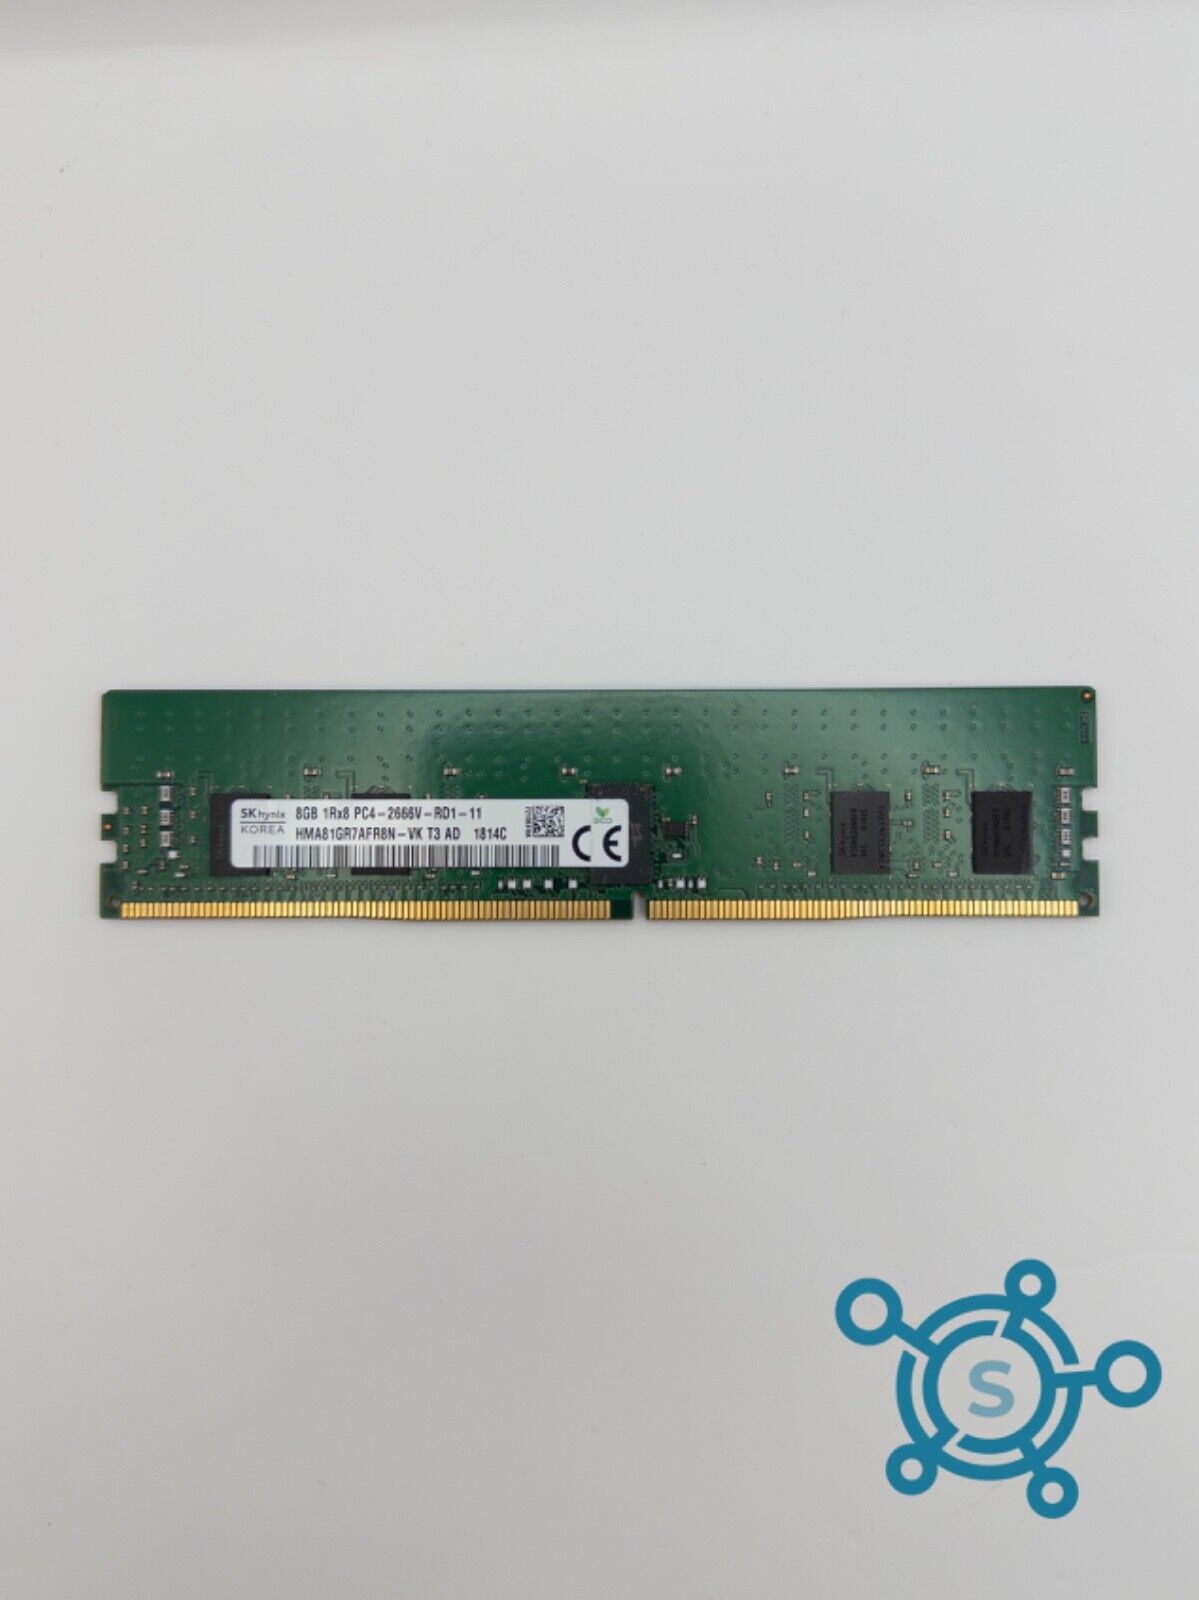 2x LOT Hynix 8GB 2666V DDR4 ECC RDIMM Memory RAM HMA81GR7AFR8N-VK 1Rx8 PC4-2666V